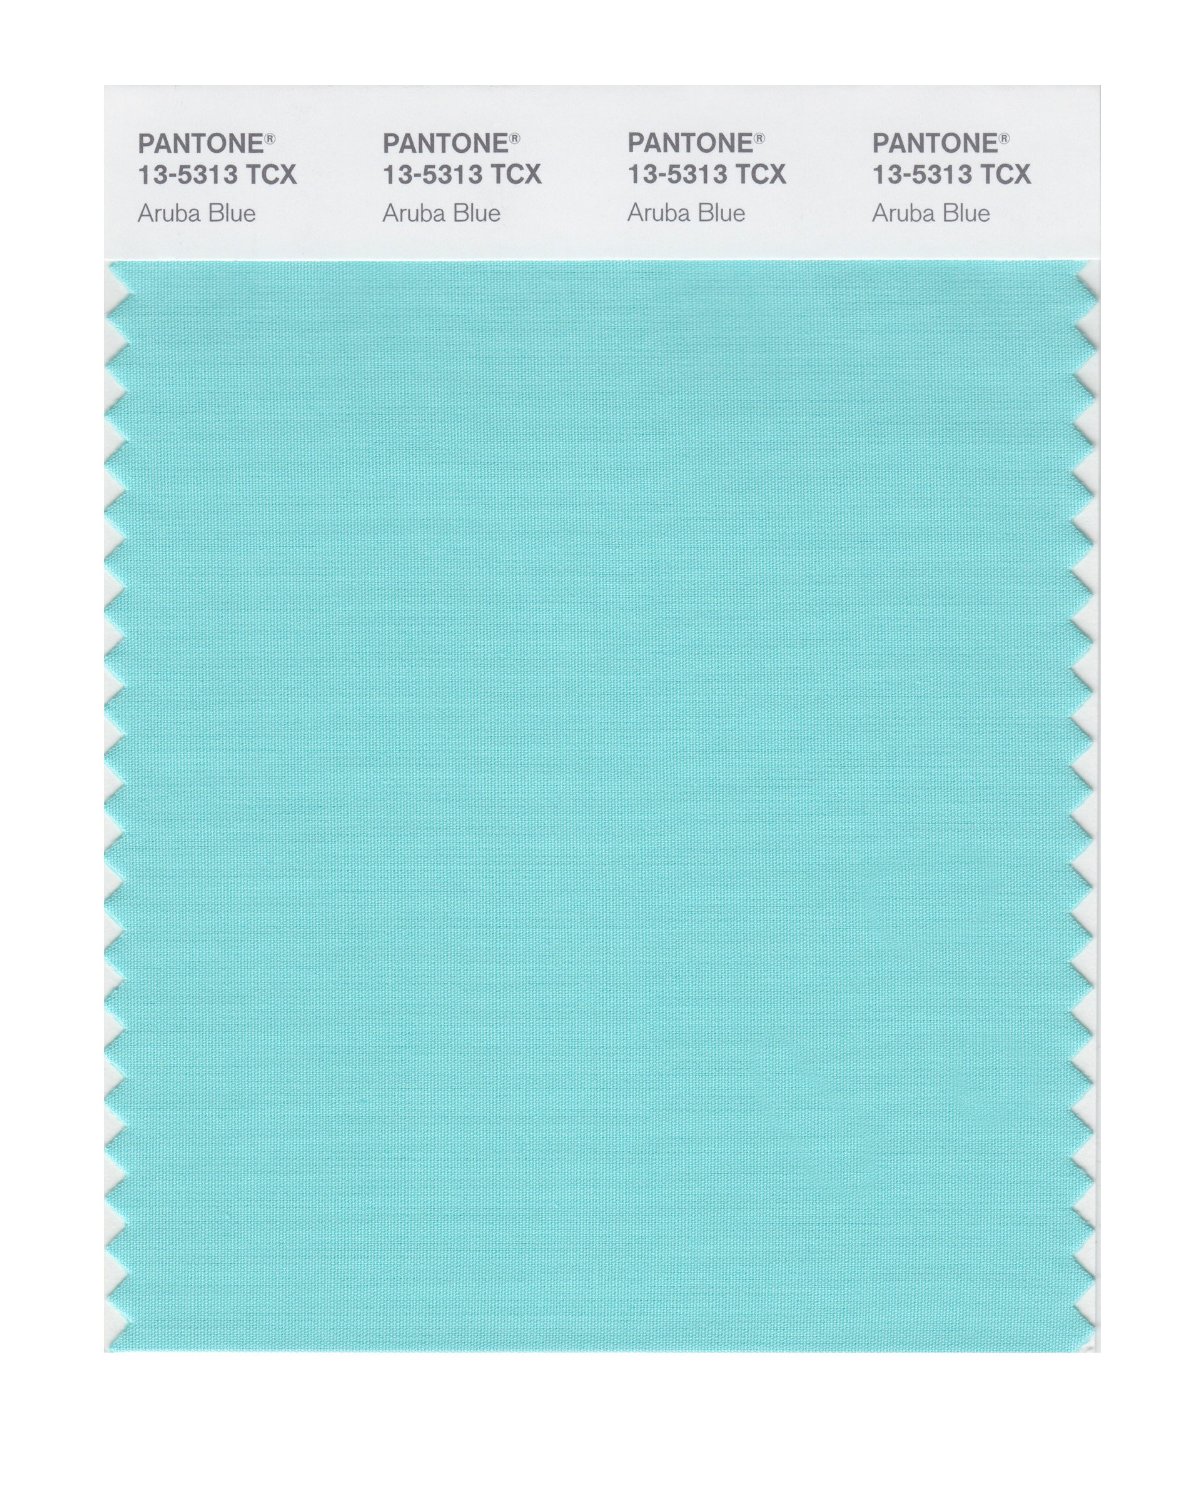 Pantone Cotton Swatch 13-5313 Aruba Blue